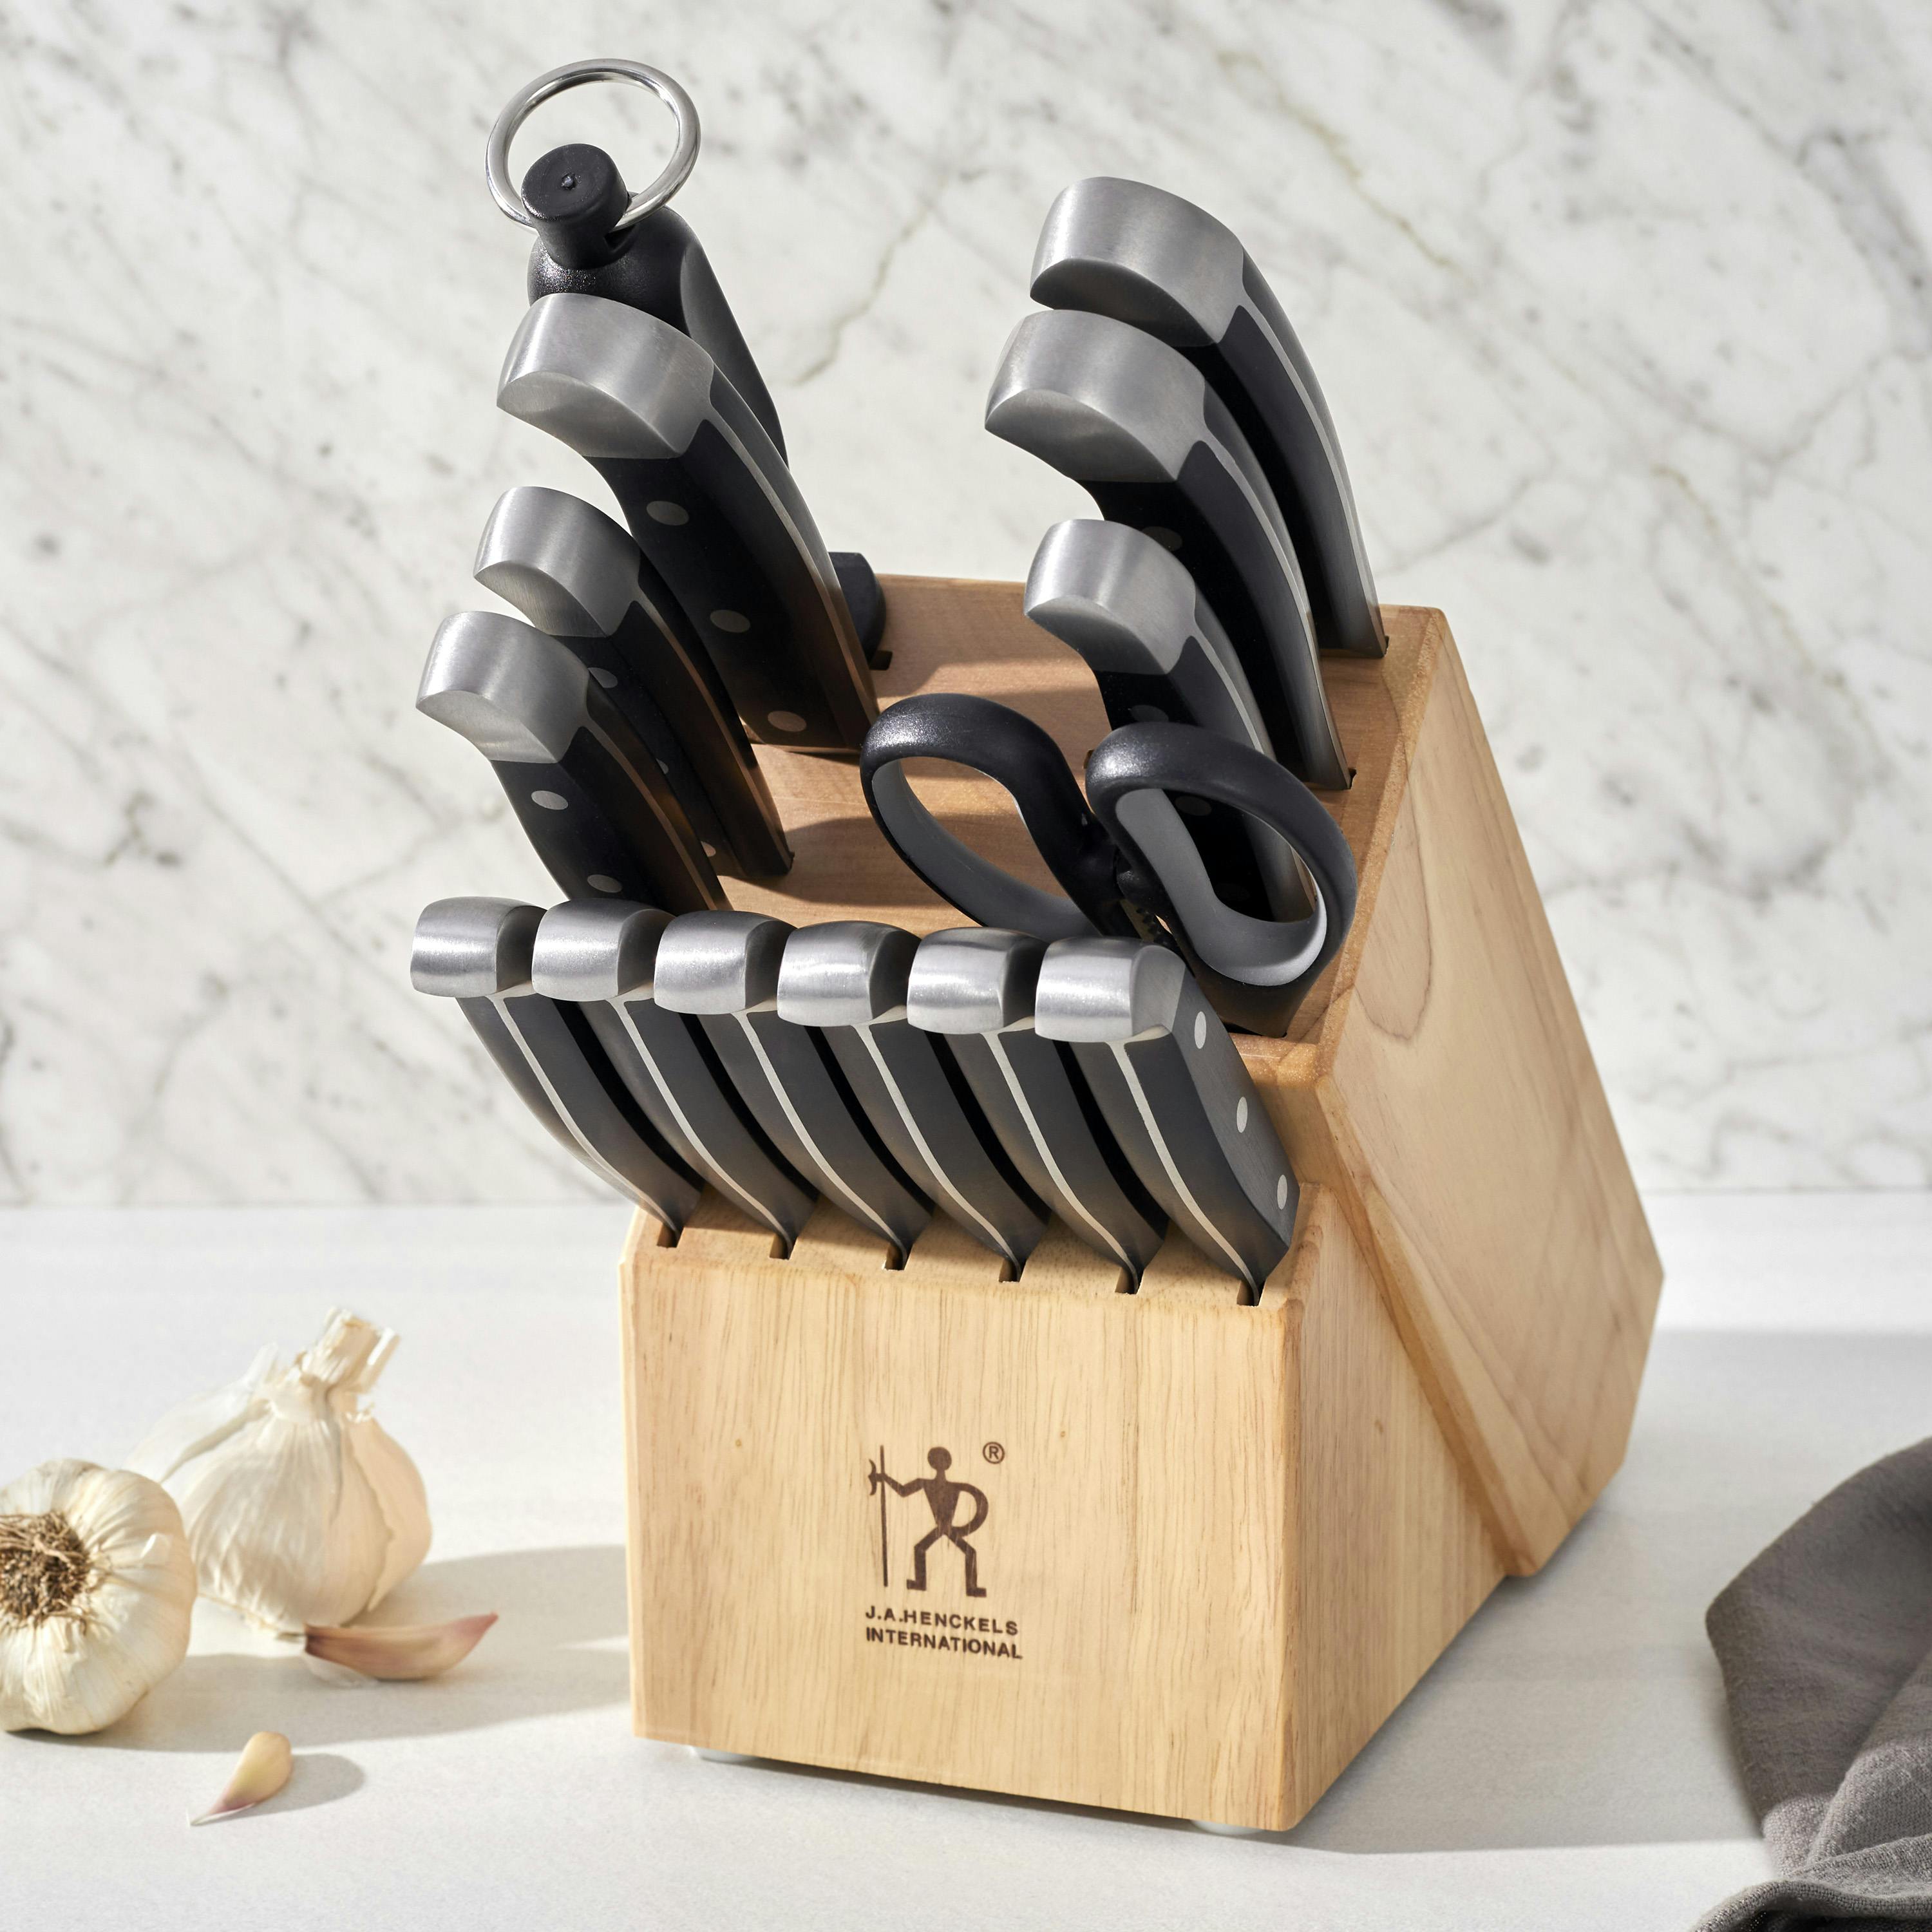 HENCKELS Fine Edge Pro Knife block set, 15-pc,Color Light Brown Size15-pc  Style Fine Edge Pro,Y0292 - Cutlery & Kitchen Knives, Facebook Marketplace